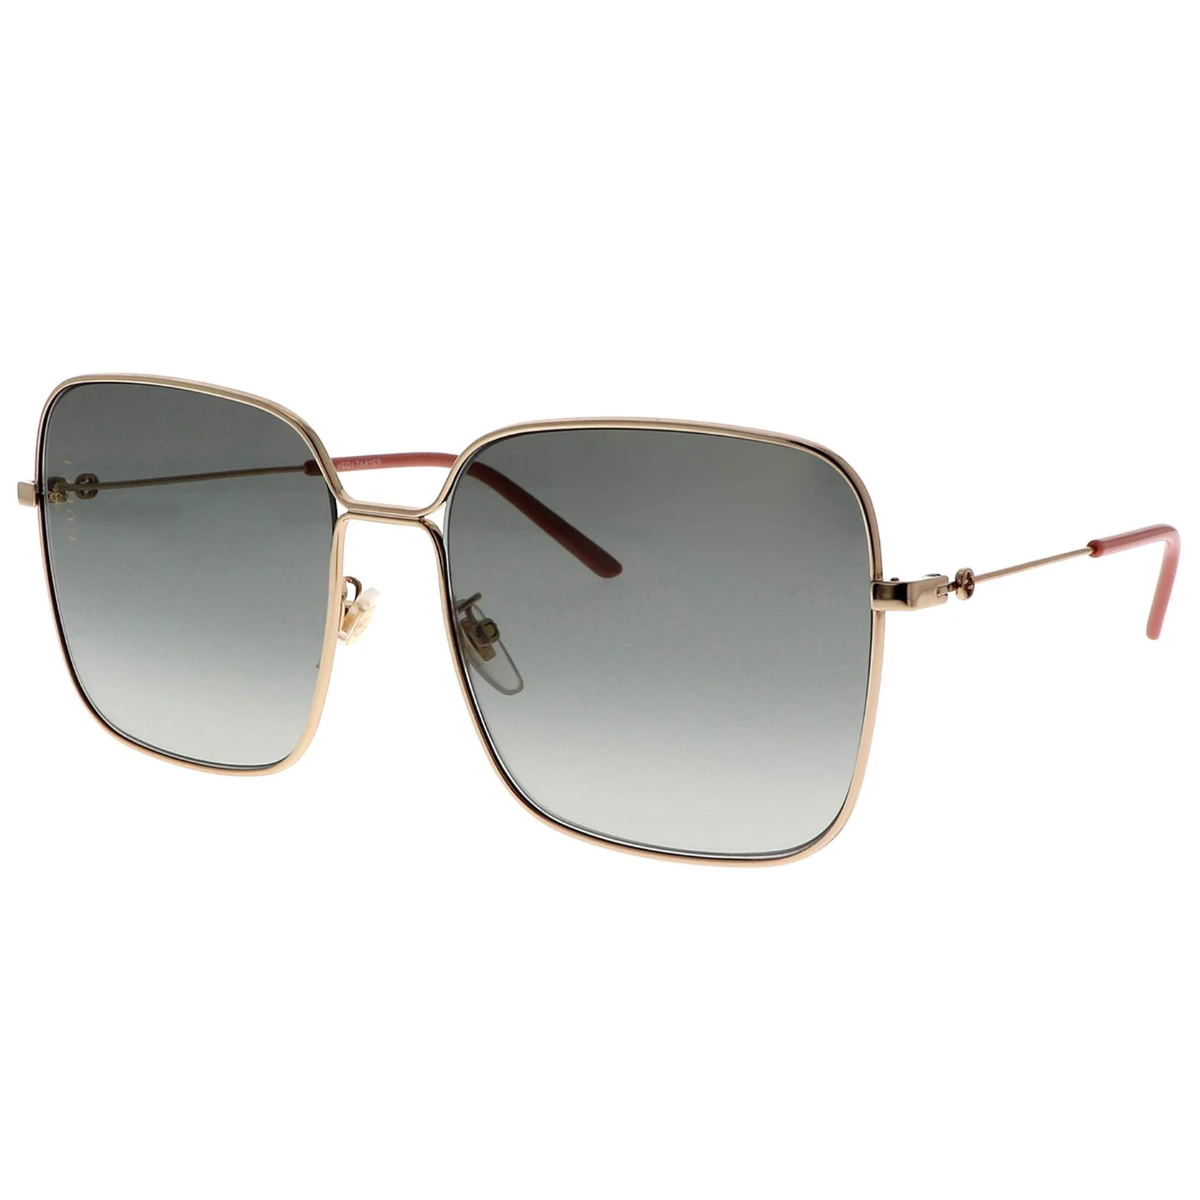 "Shop Gucci 0443S Sunglasses for Women: Optorium Collection"